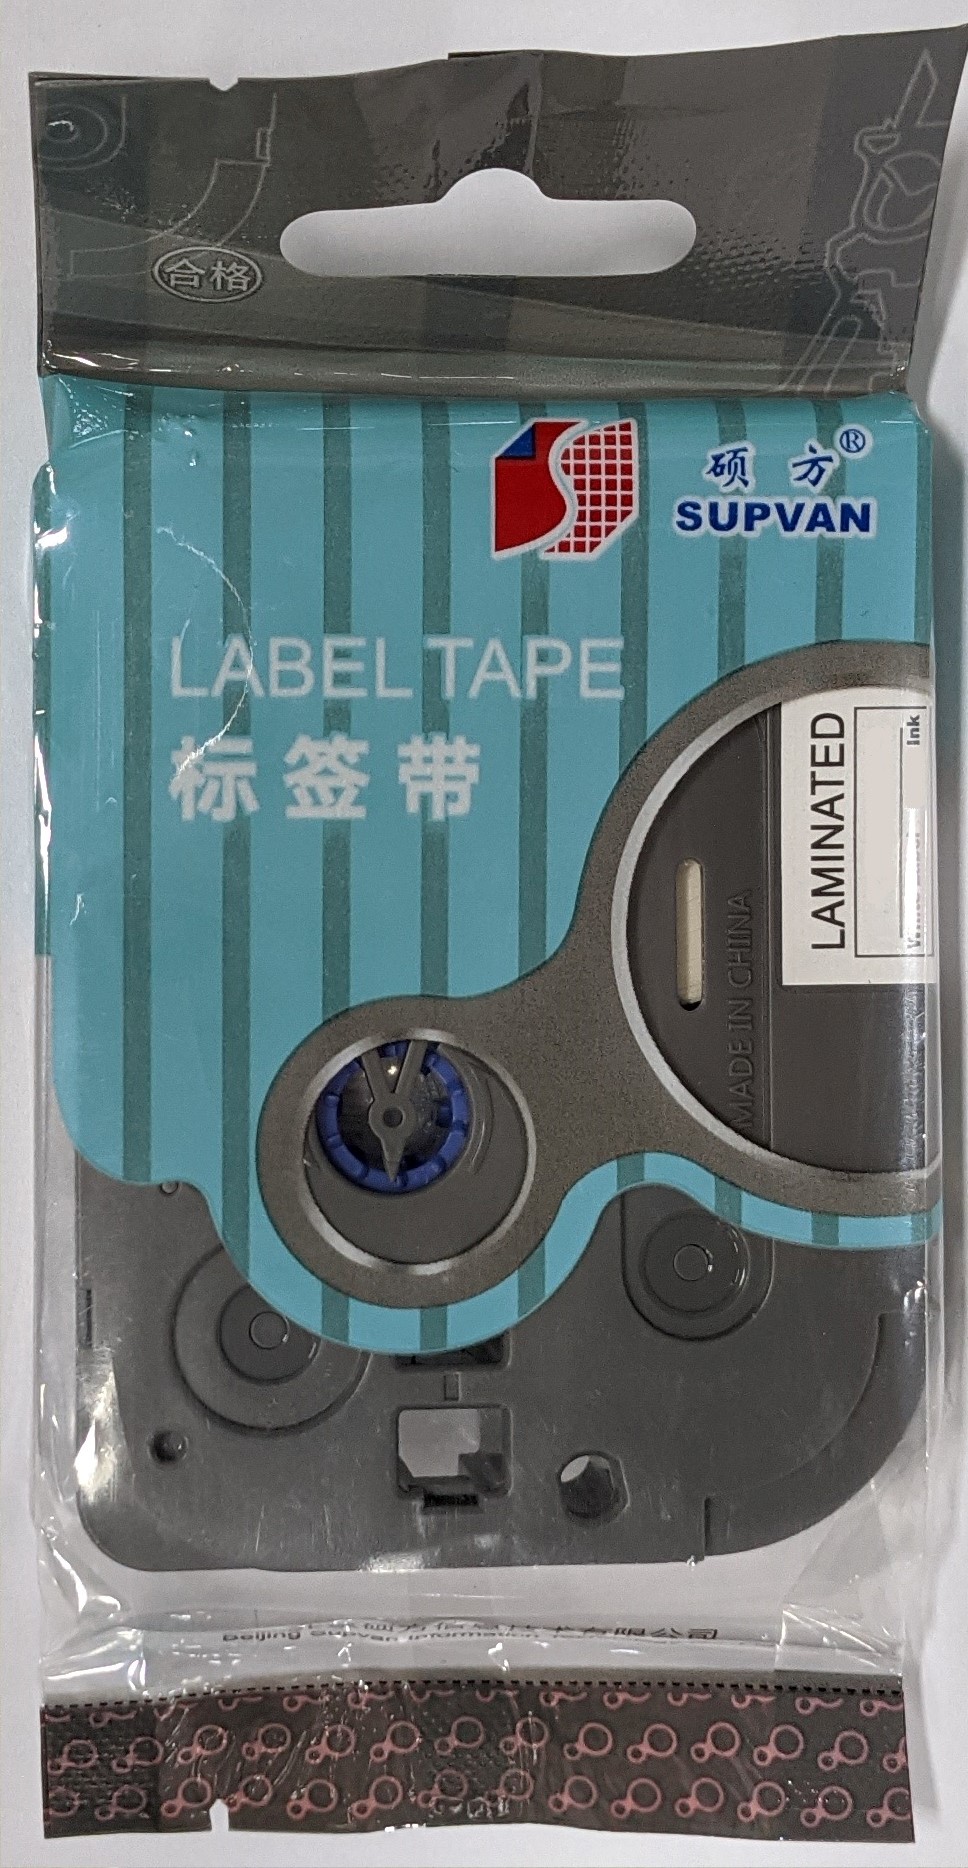 Samolepicí páska Supvan L-233E, 12mm x 8m, modrý tisk / bílý podklad, laminovaná